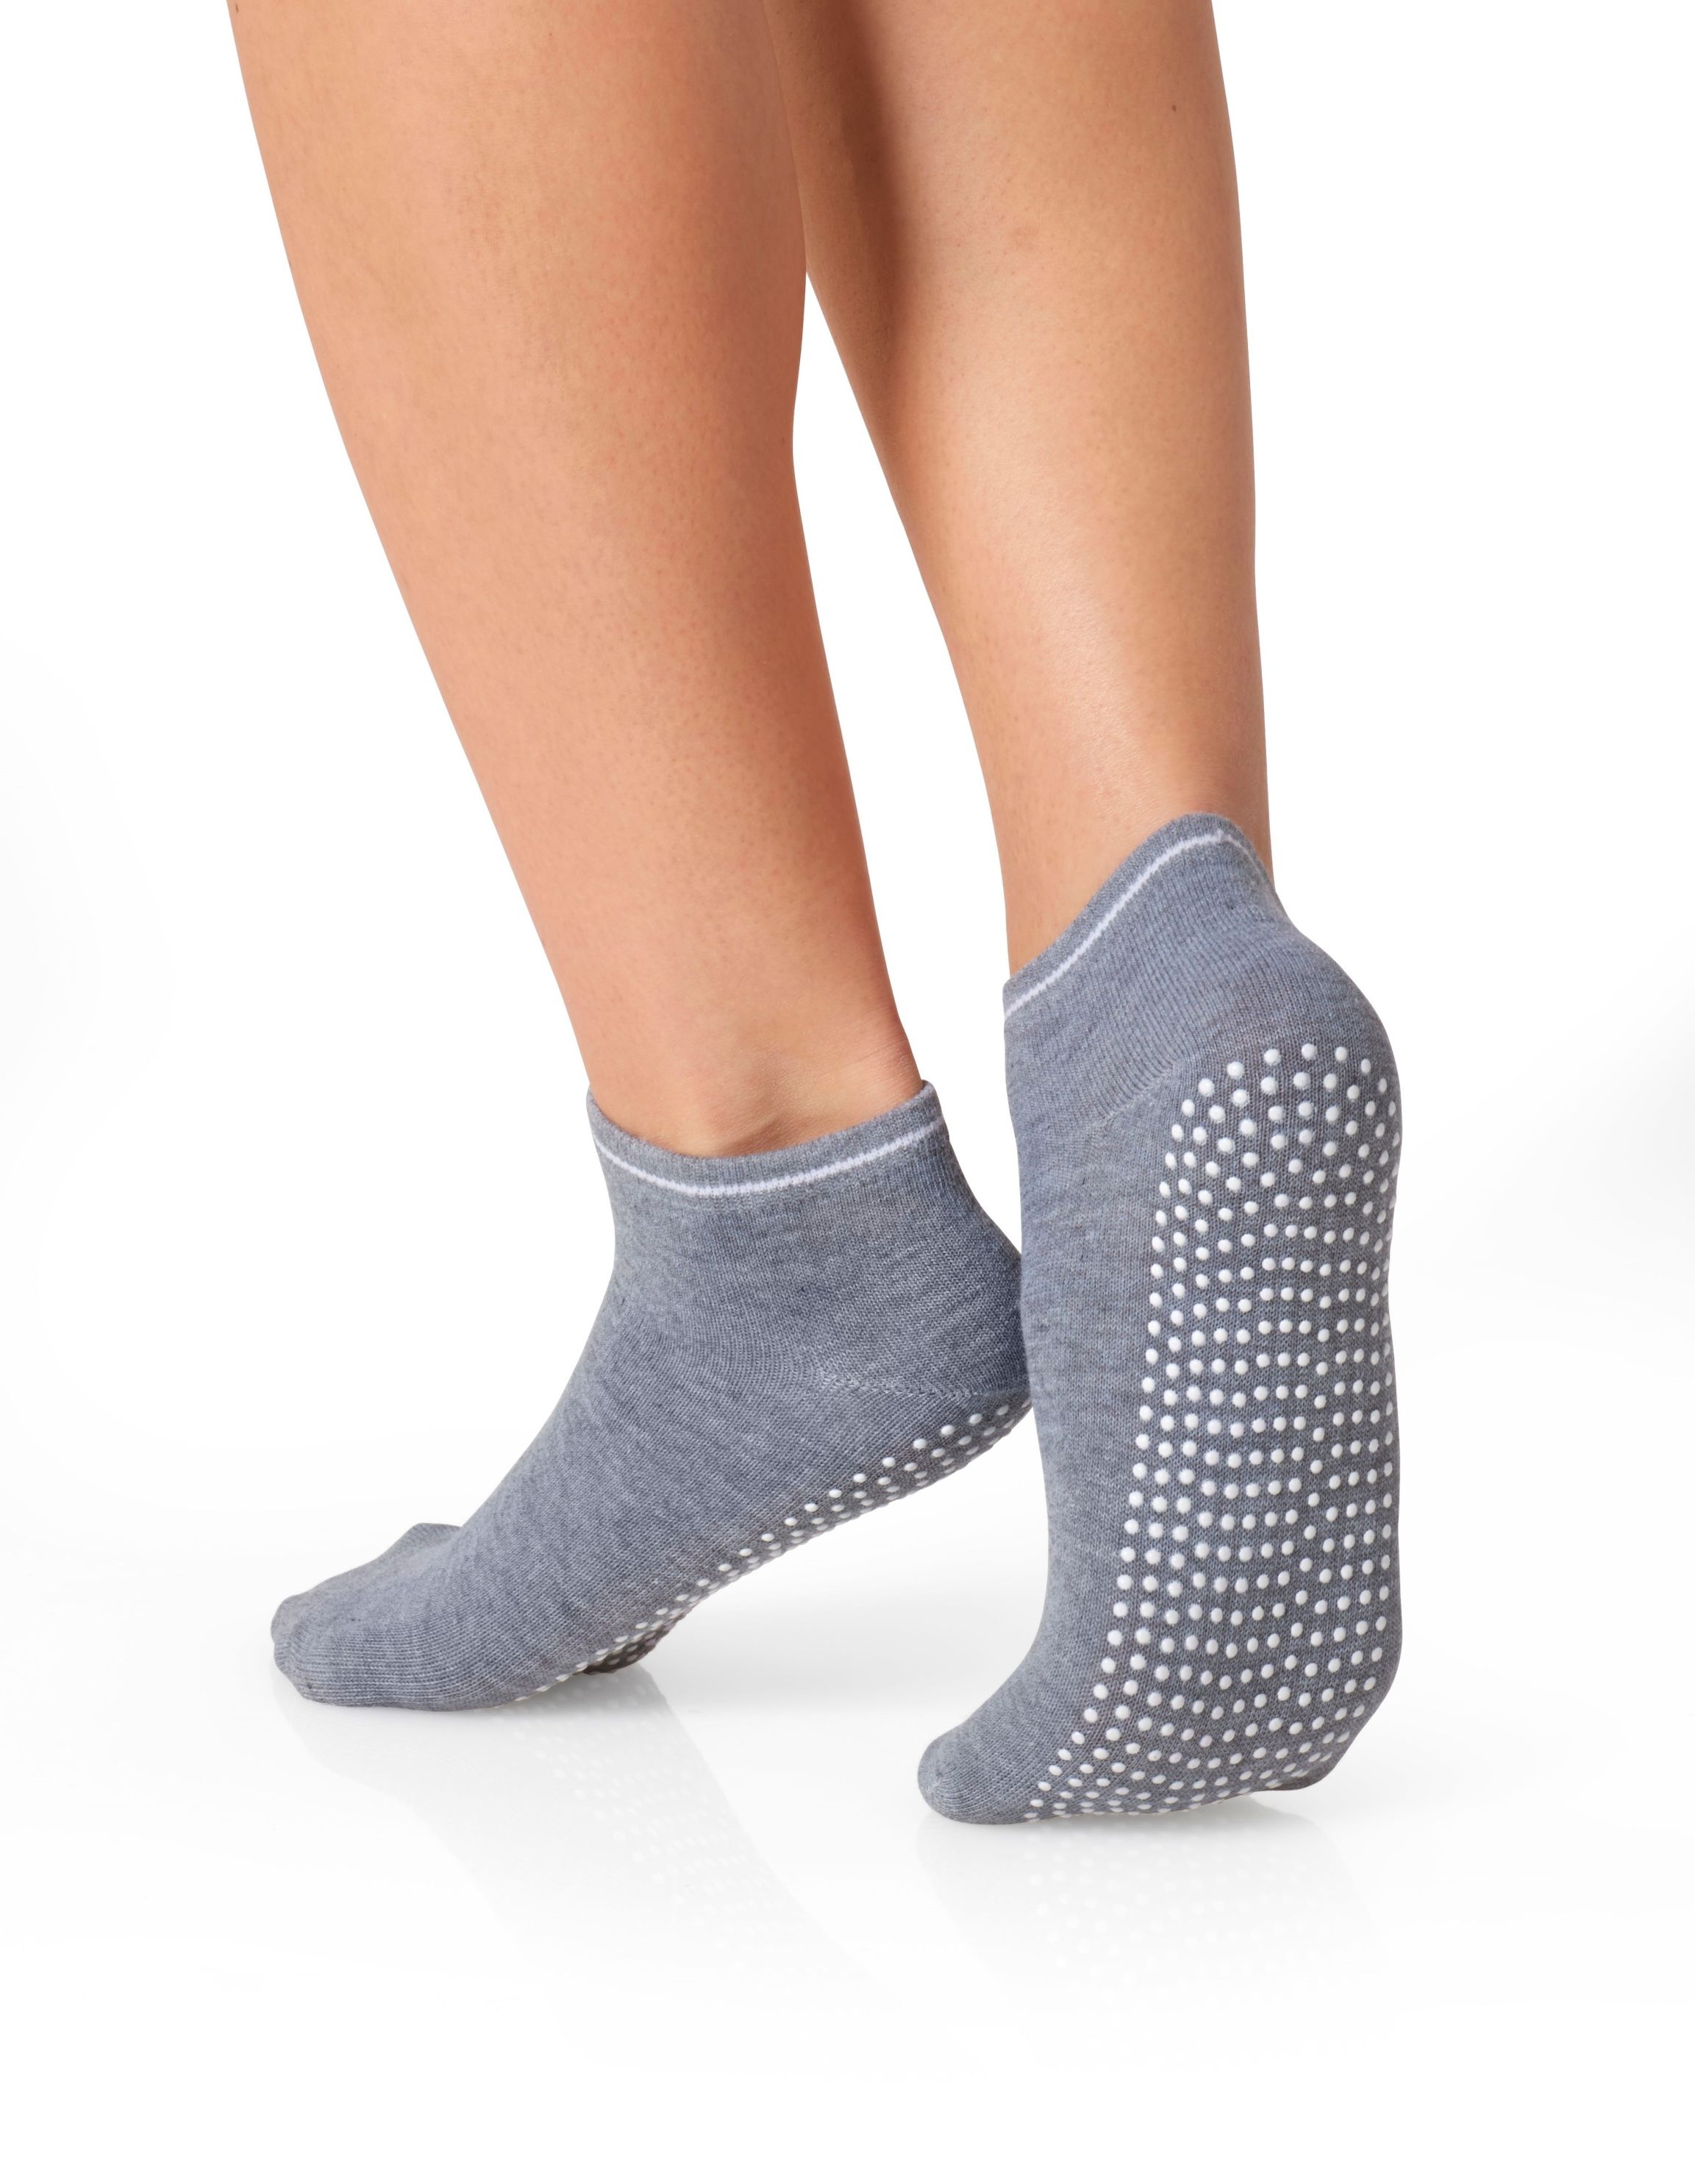 Yoga- und Pilates-Socken, 3 Paar jetzt bei Weltbild.de bestellen